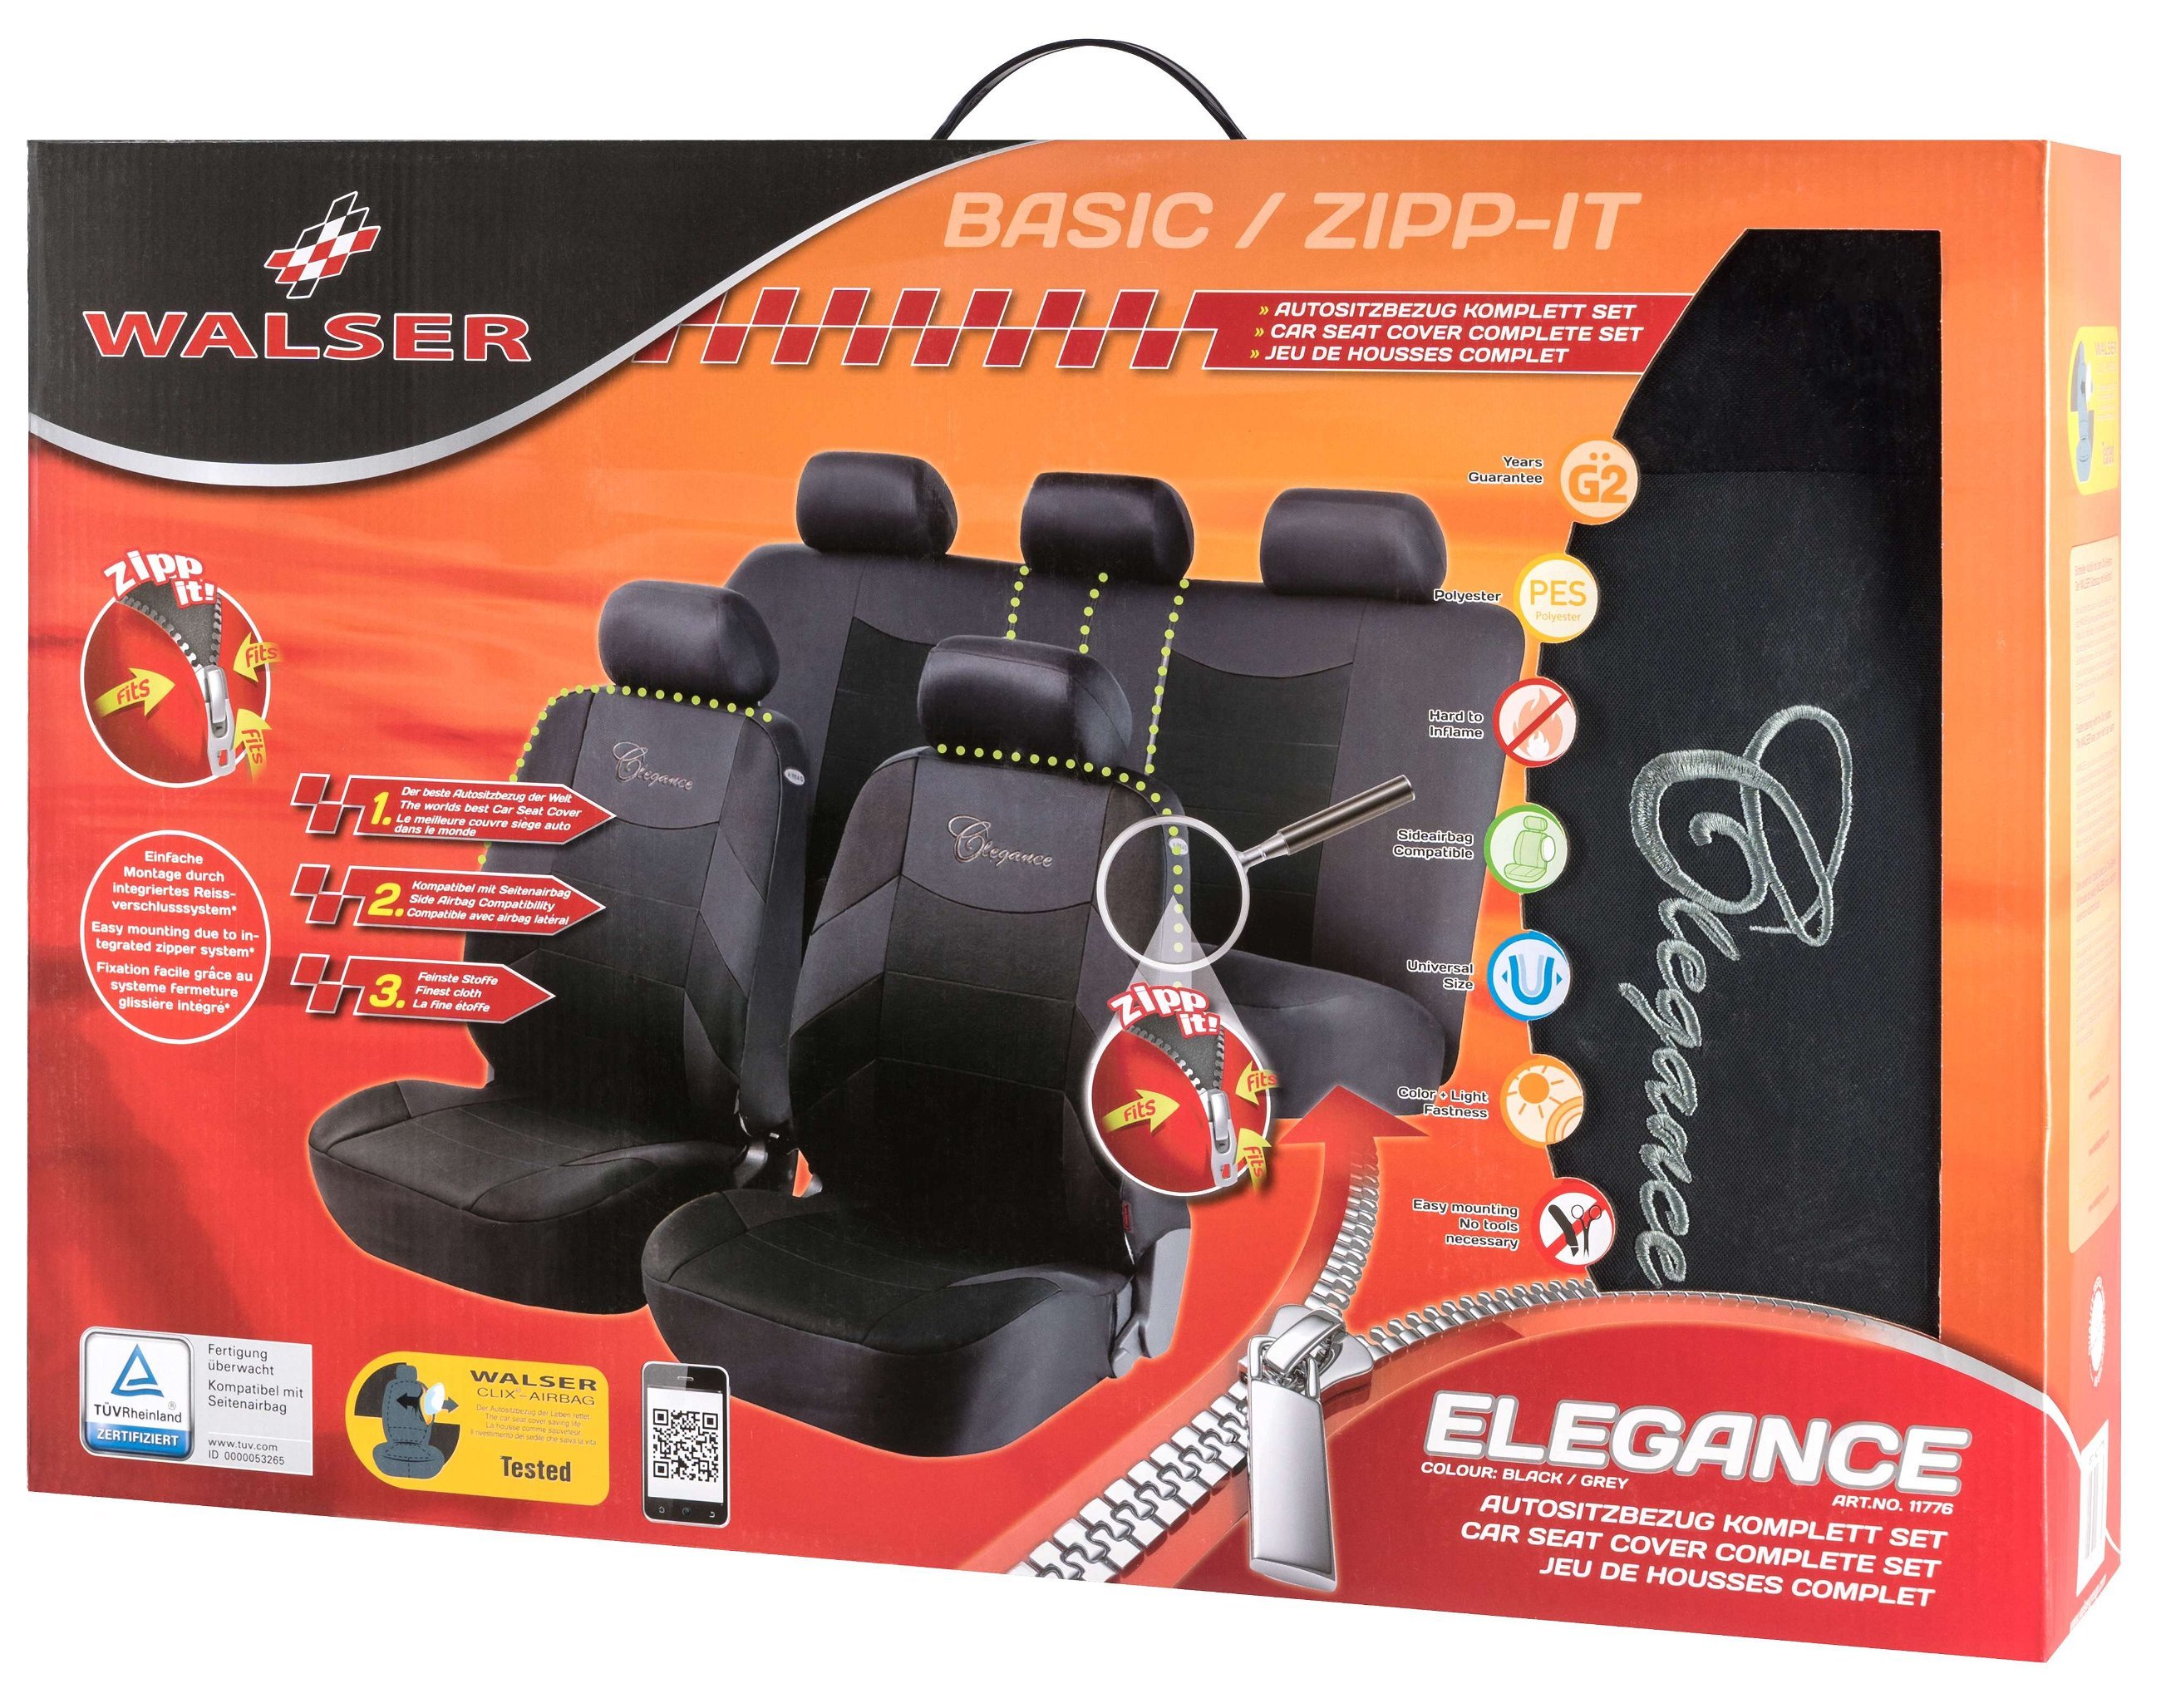 ZIPP-IT Basic Elegance car Seat covers with zipper system